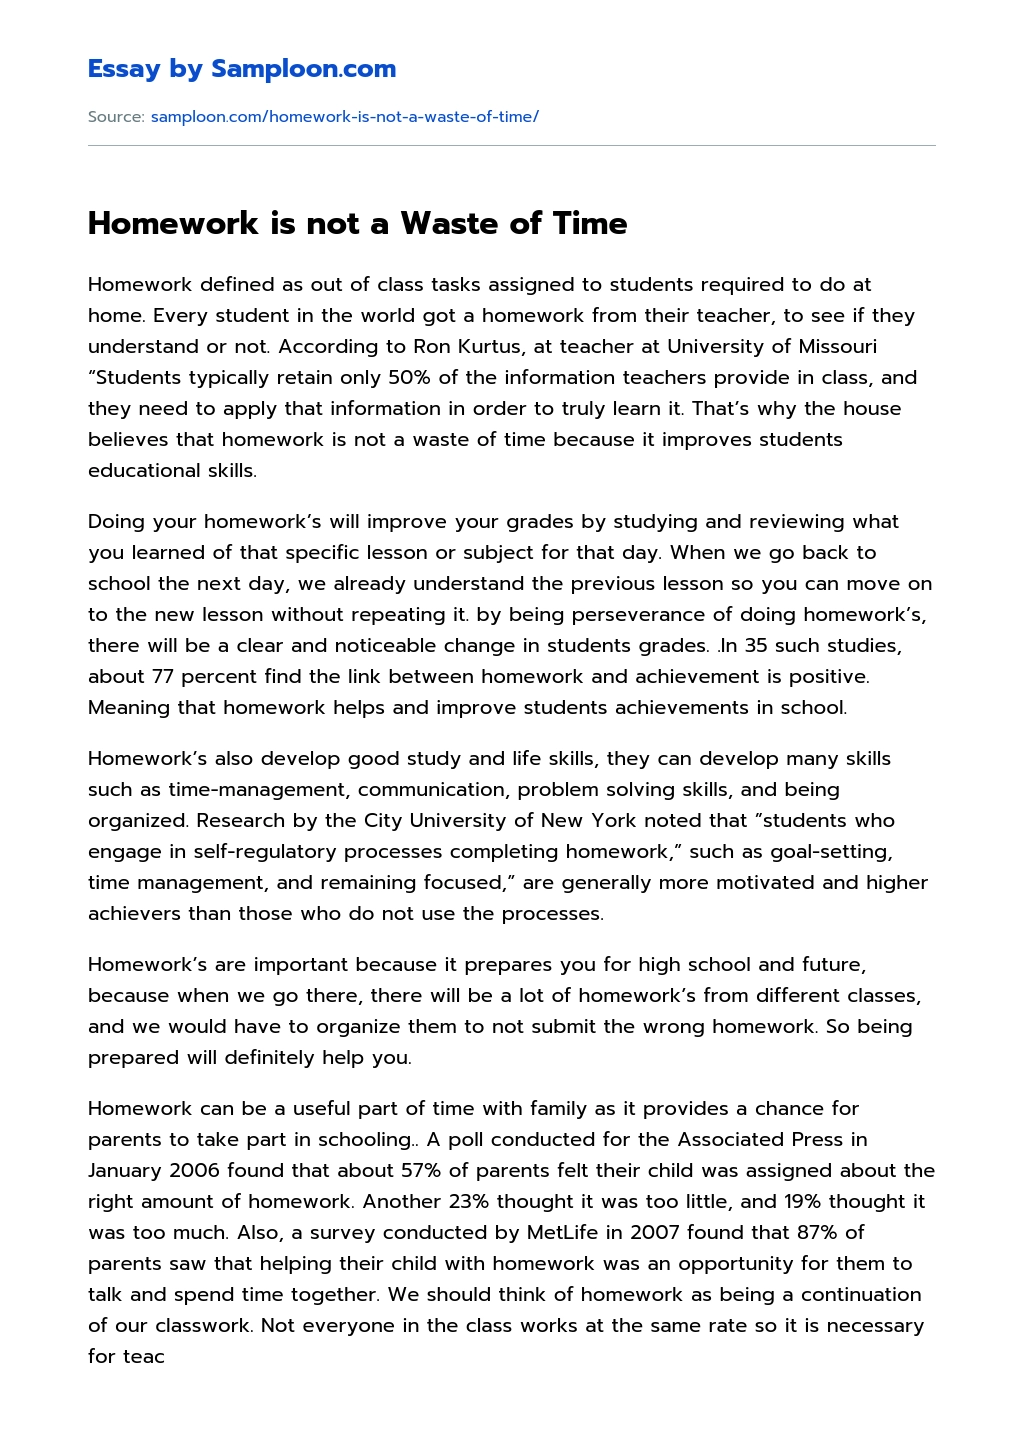 Homework is not a Waste of Time Argumentative Essay essay